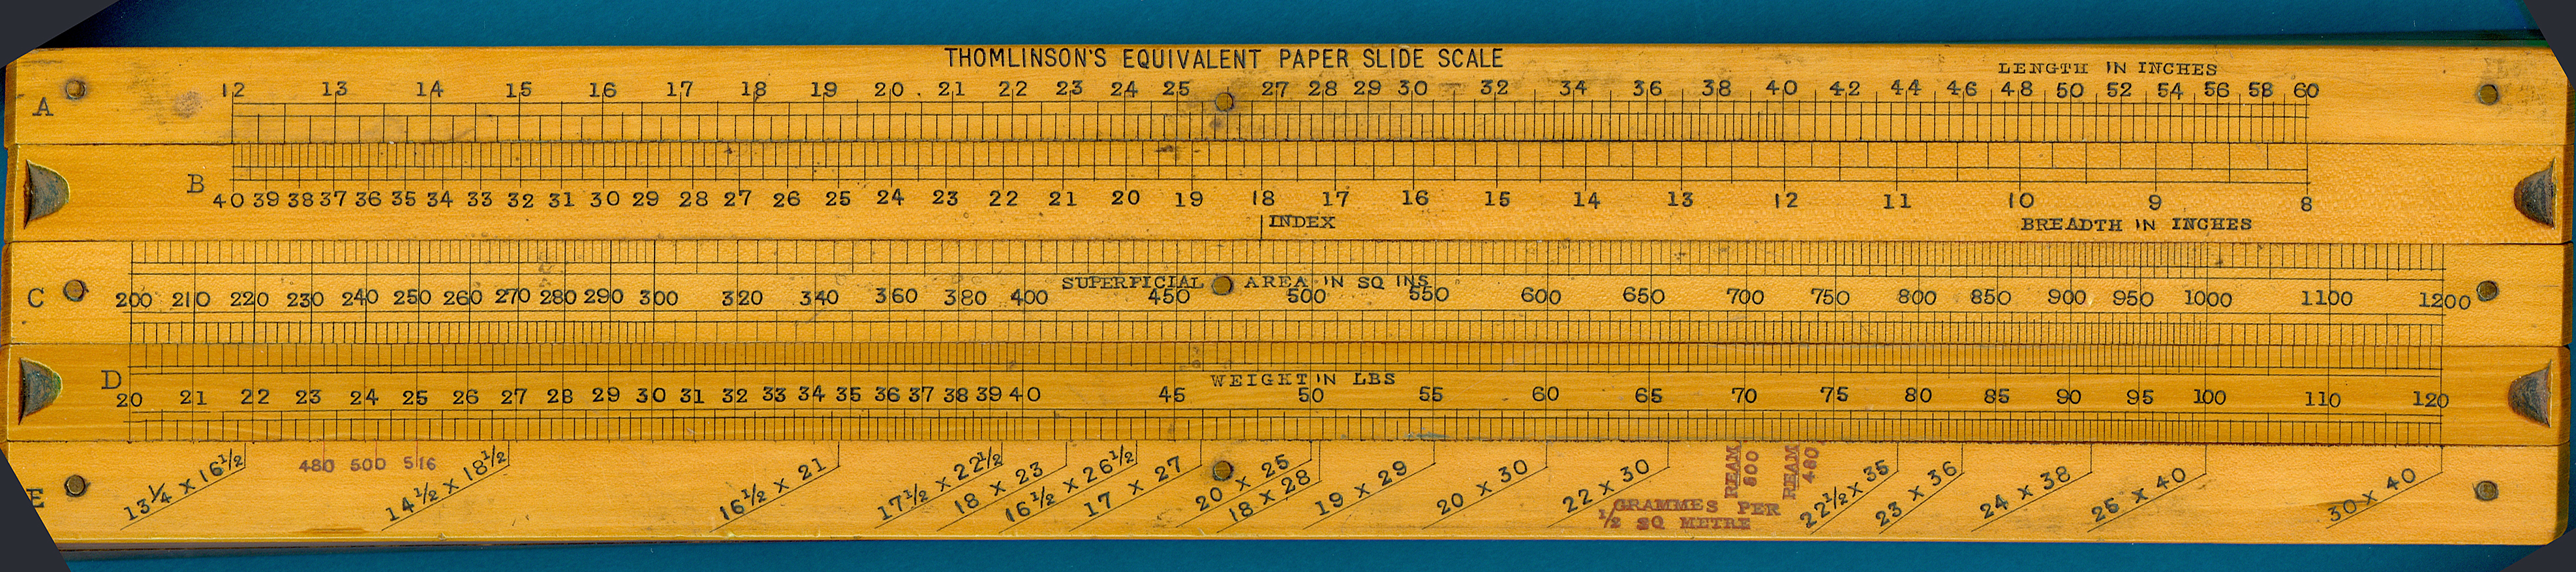 Thomlinson Equivalent Paper Slide Scale